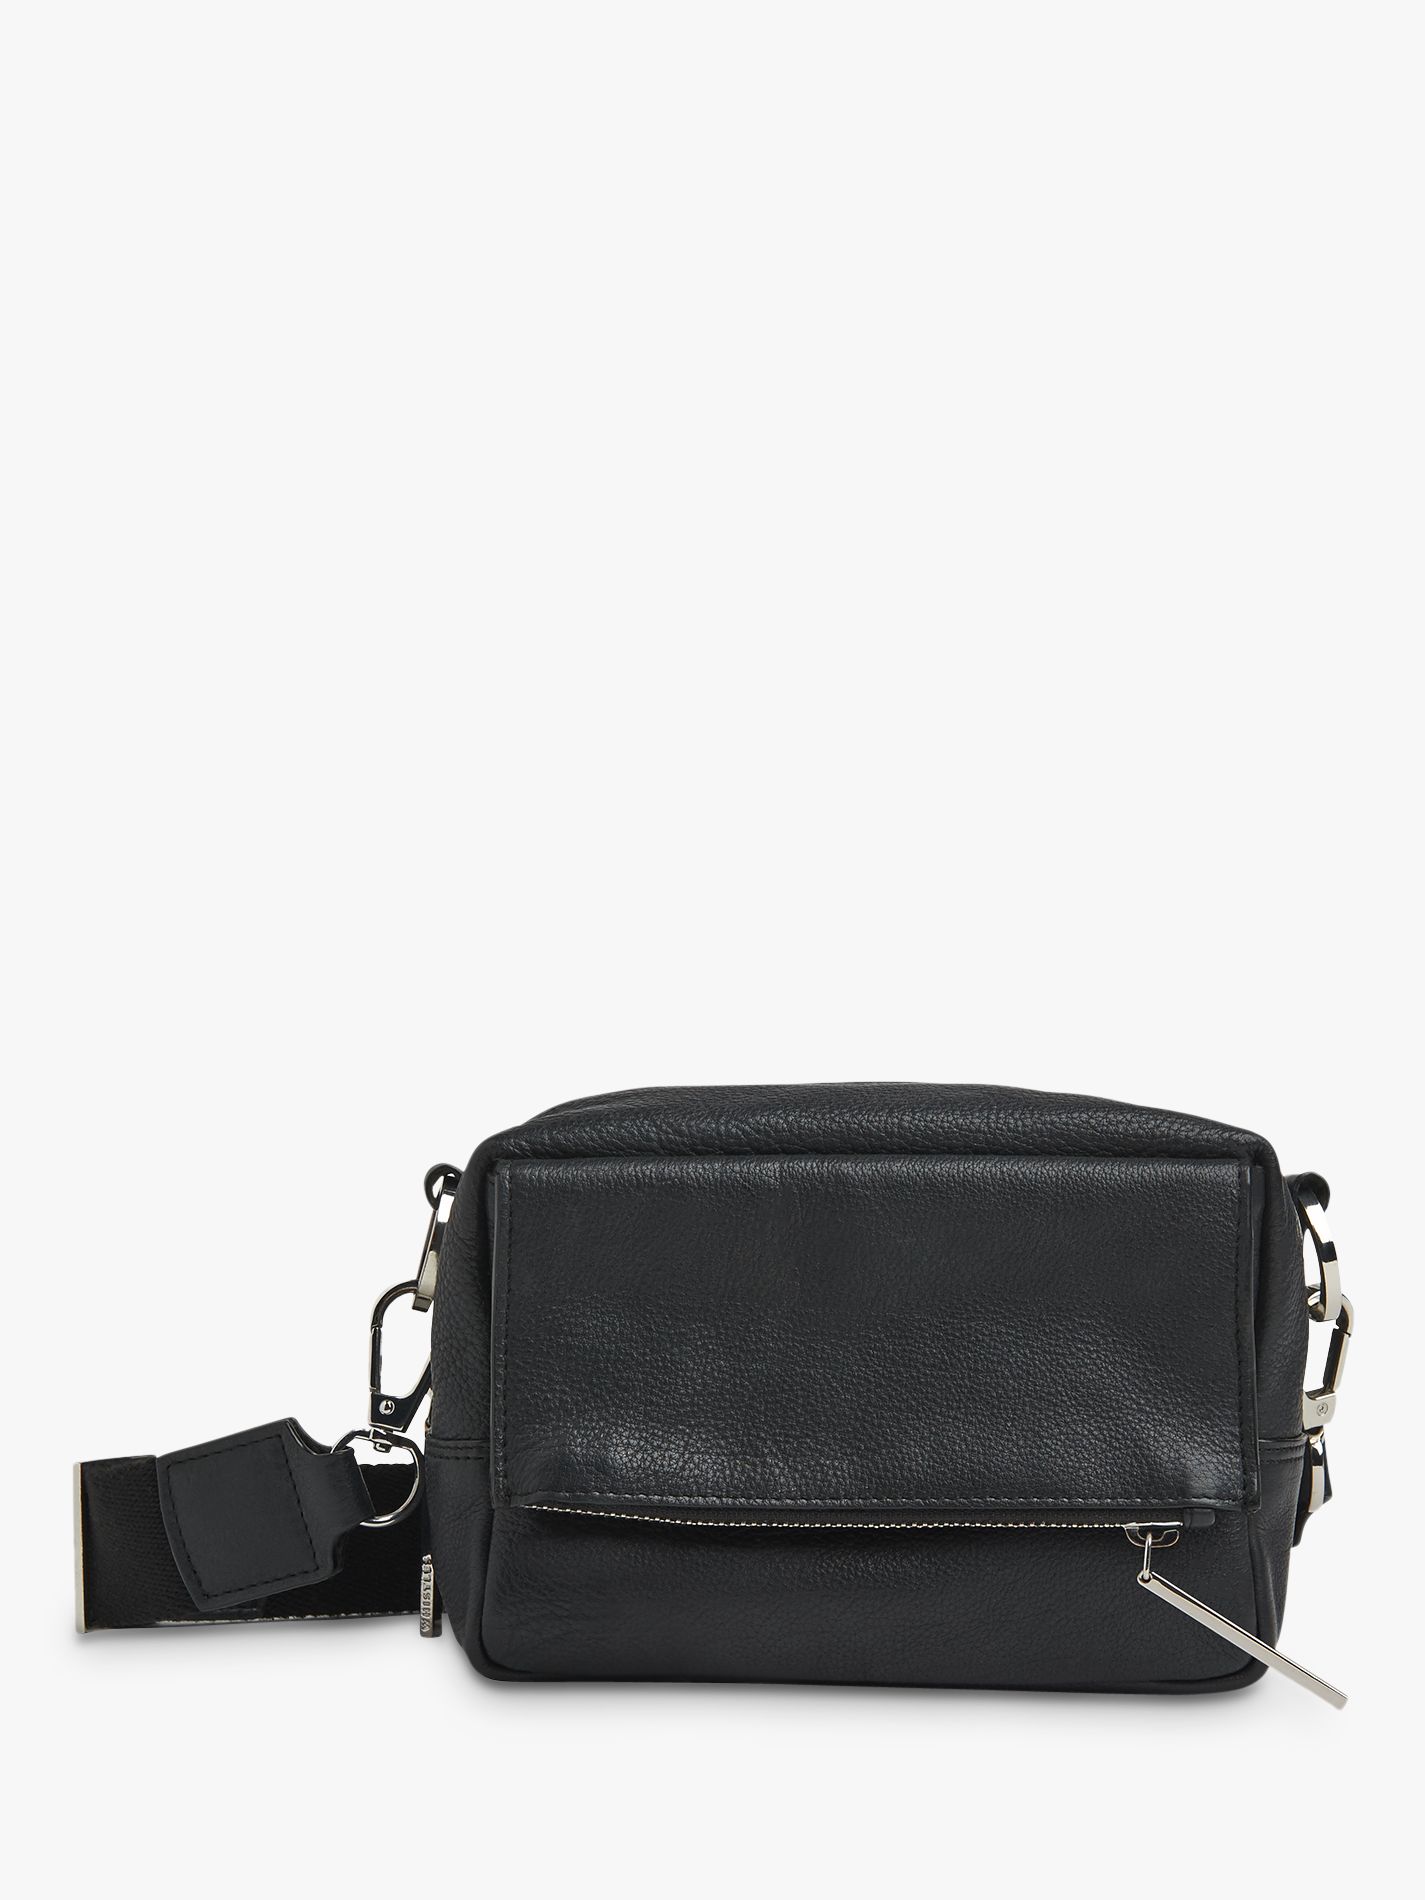 Black Small Leather Cross-Body Bag